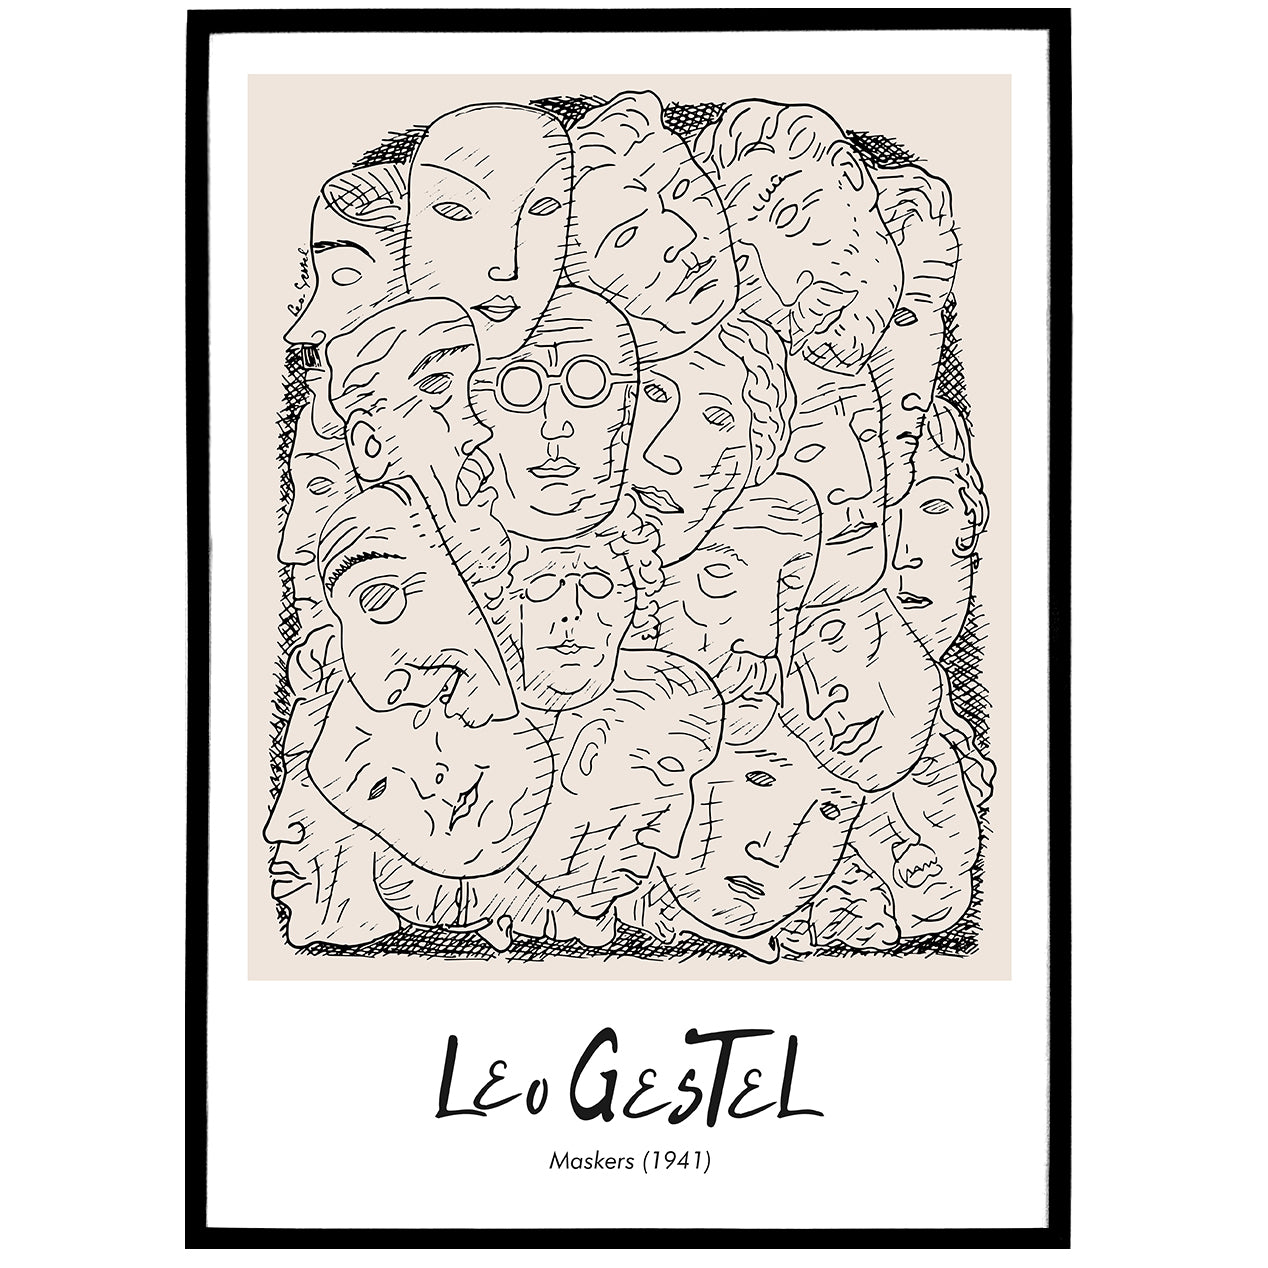 Leo Gestel Human Faces Maskers Poster